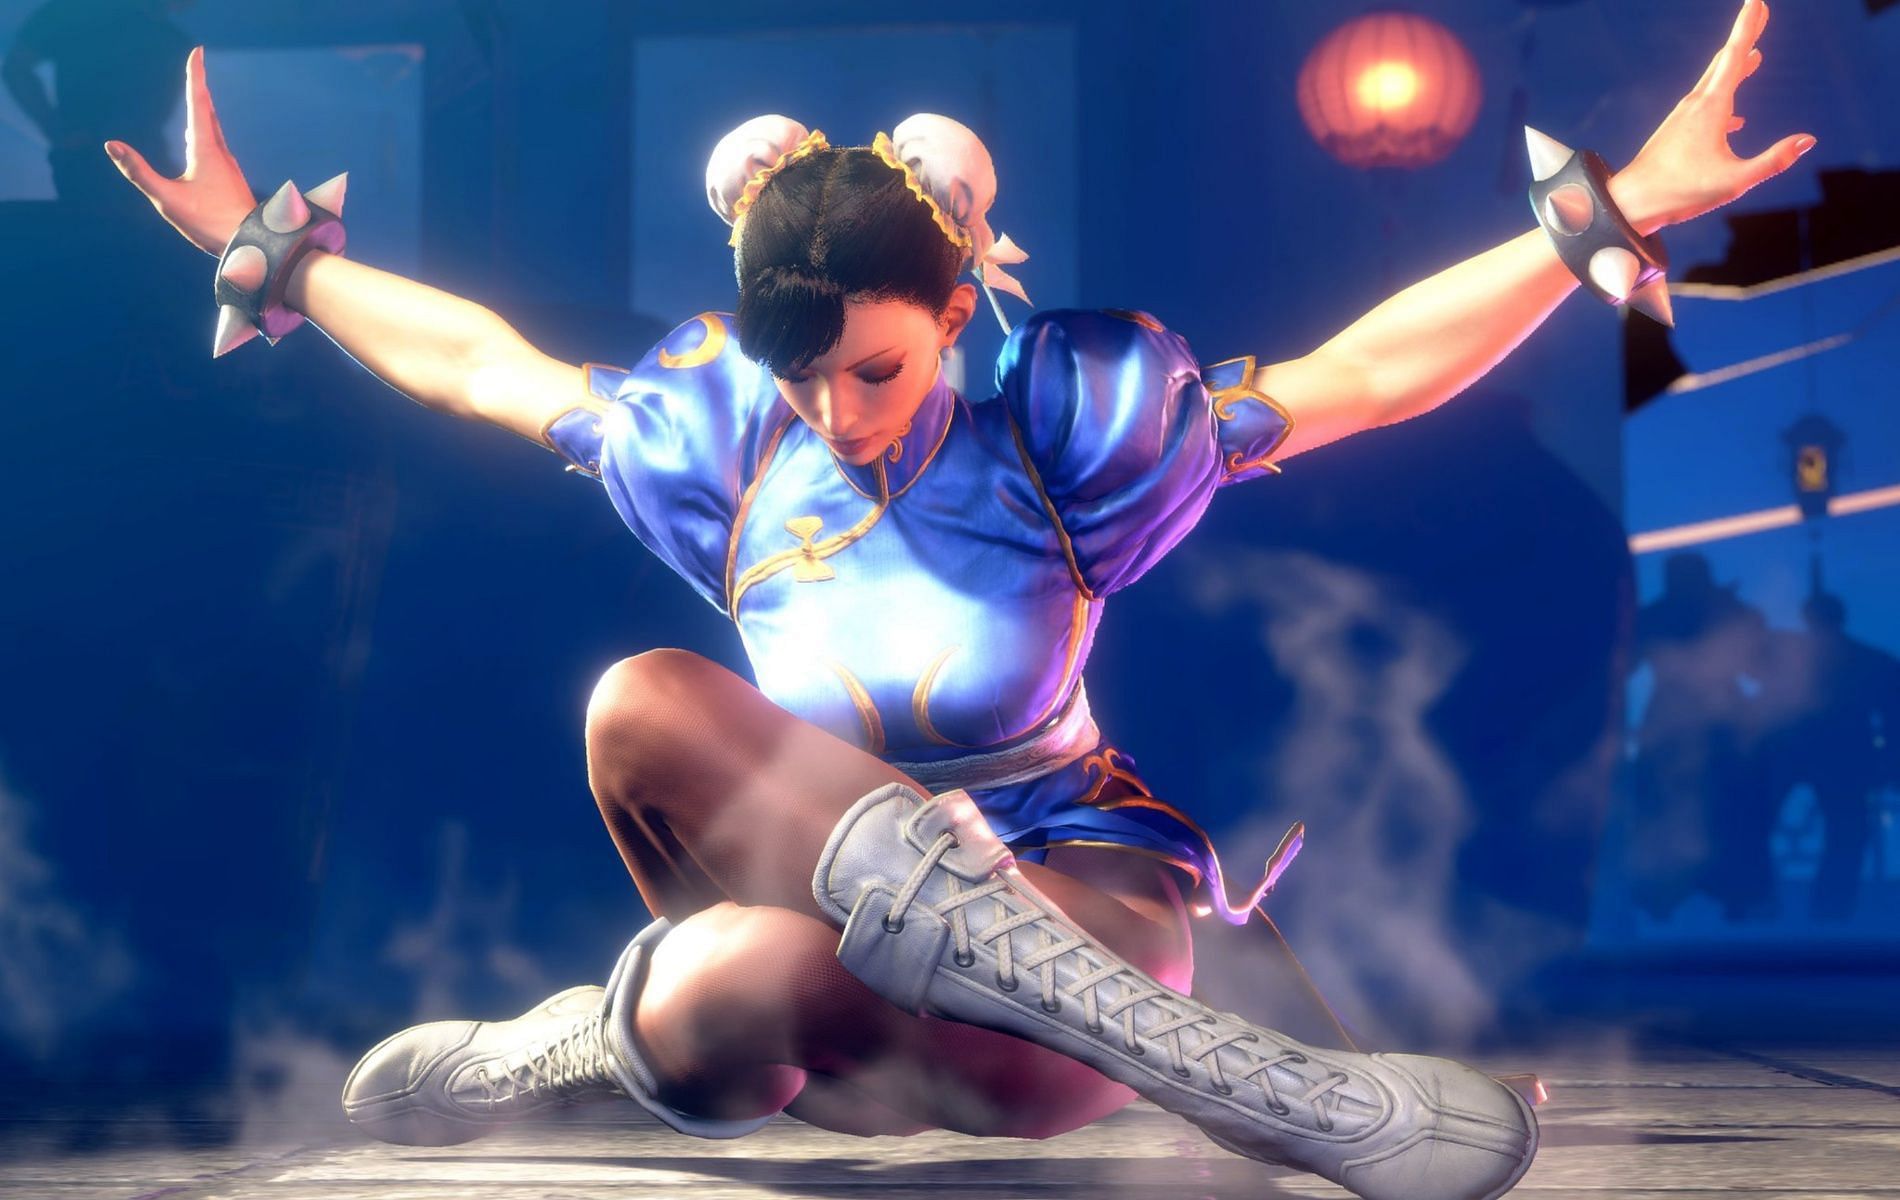 Screenshot from Street Fighter 6 cutscene featuring character Chun-Li